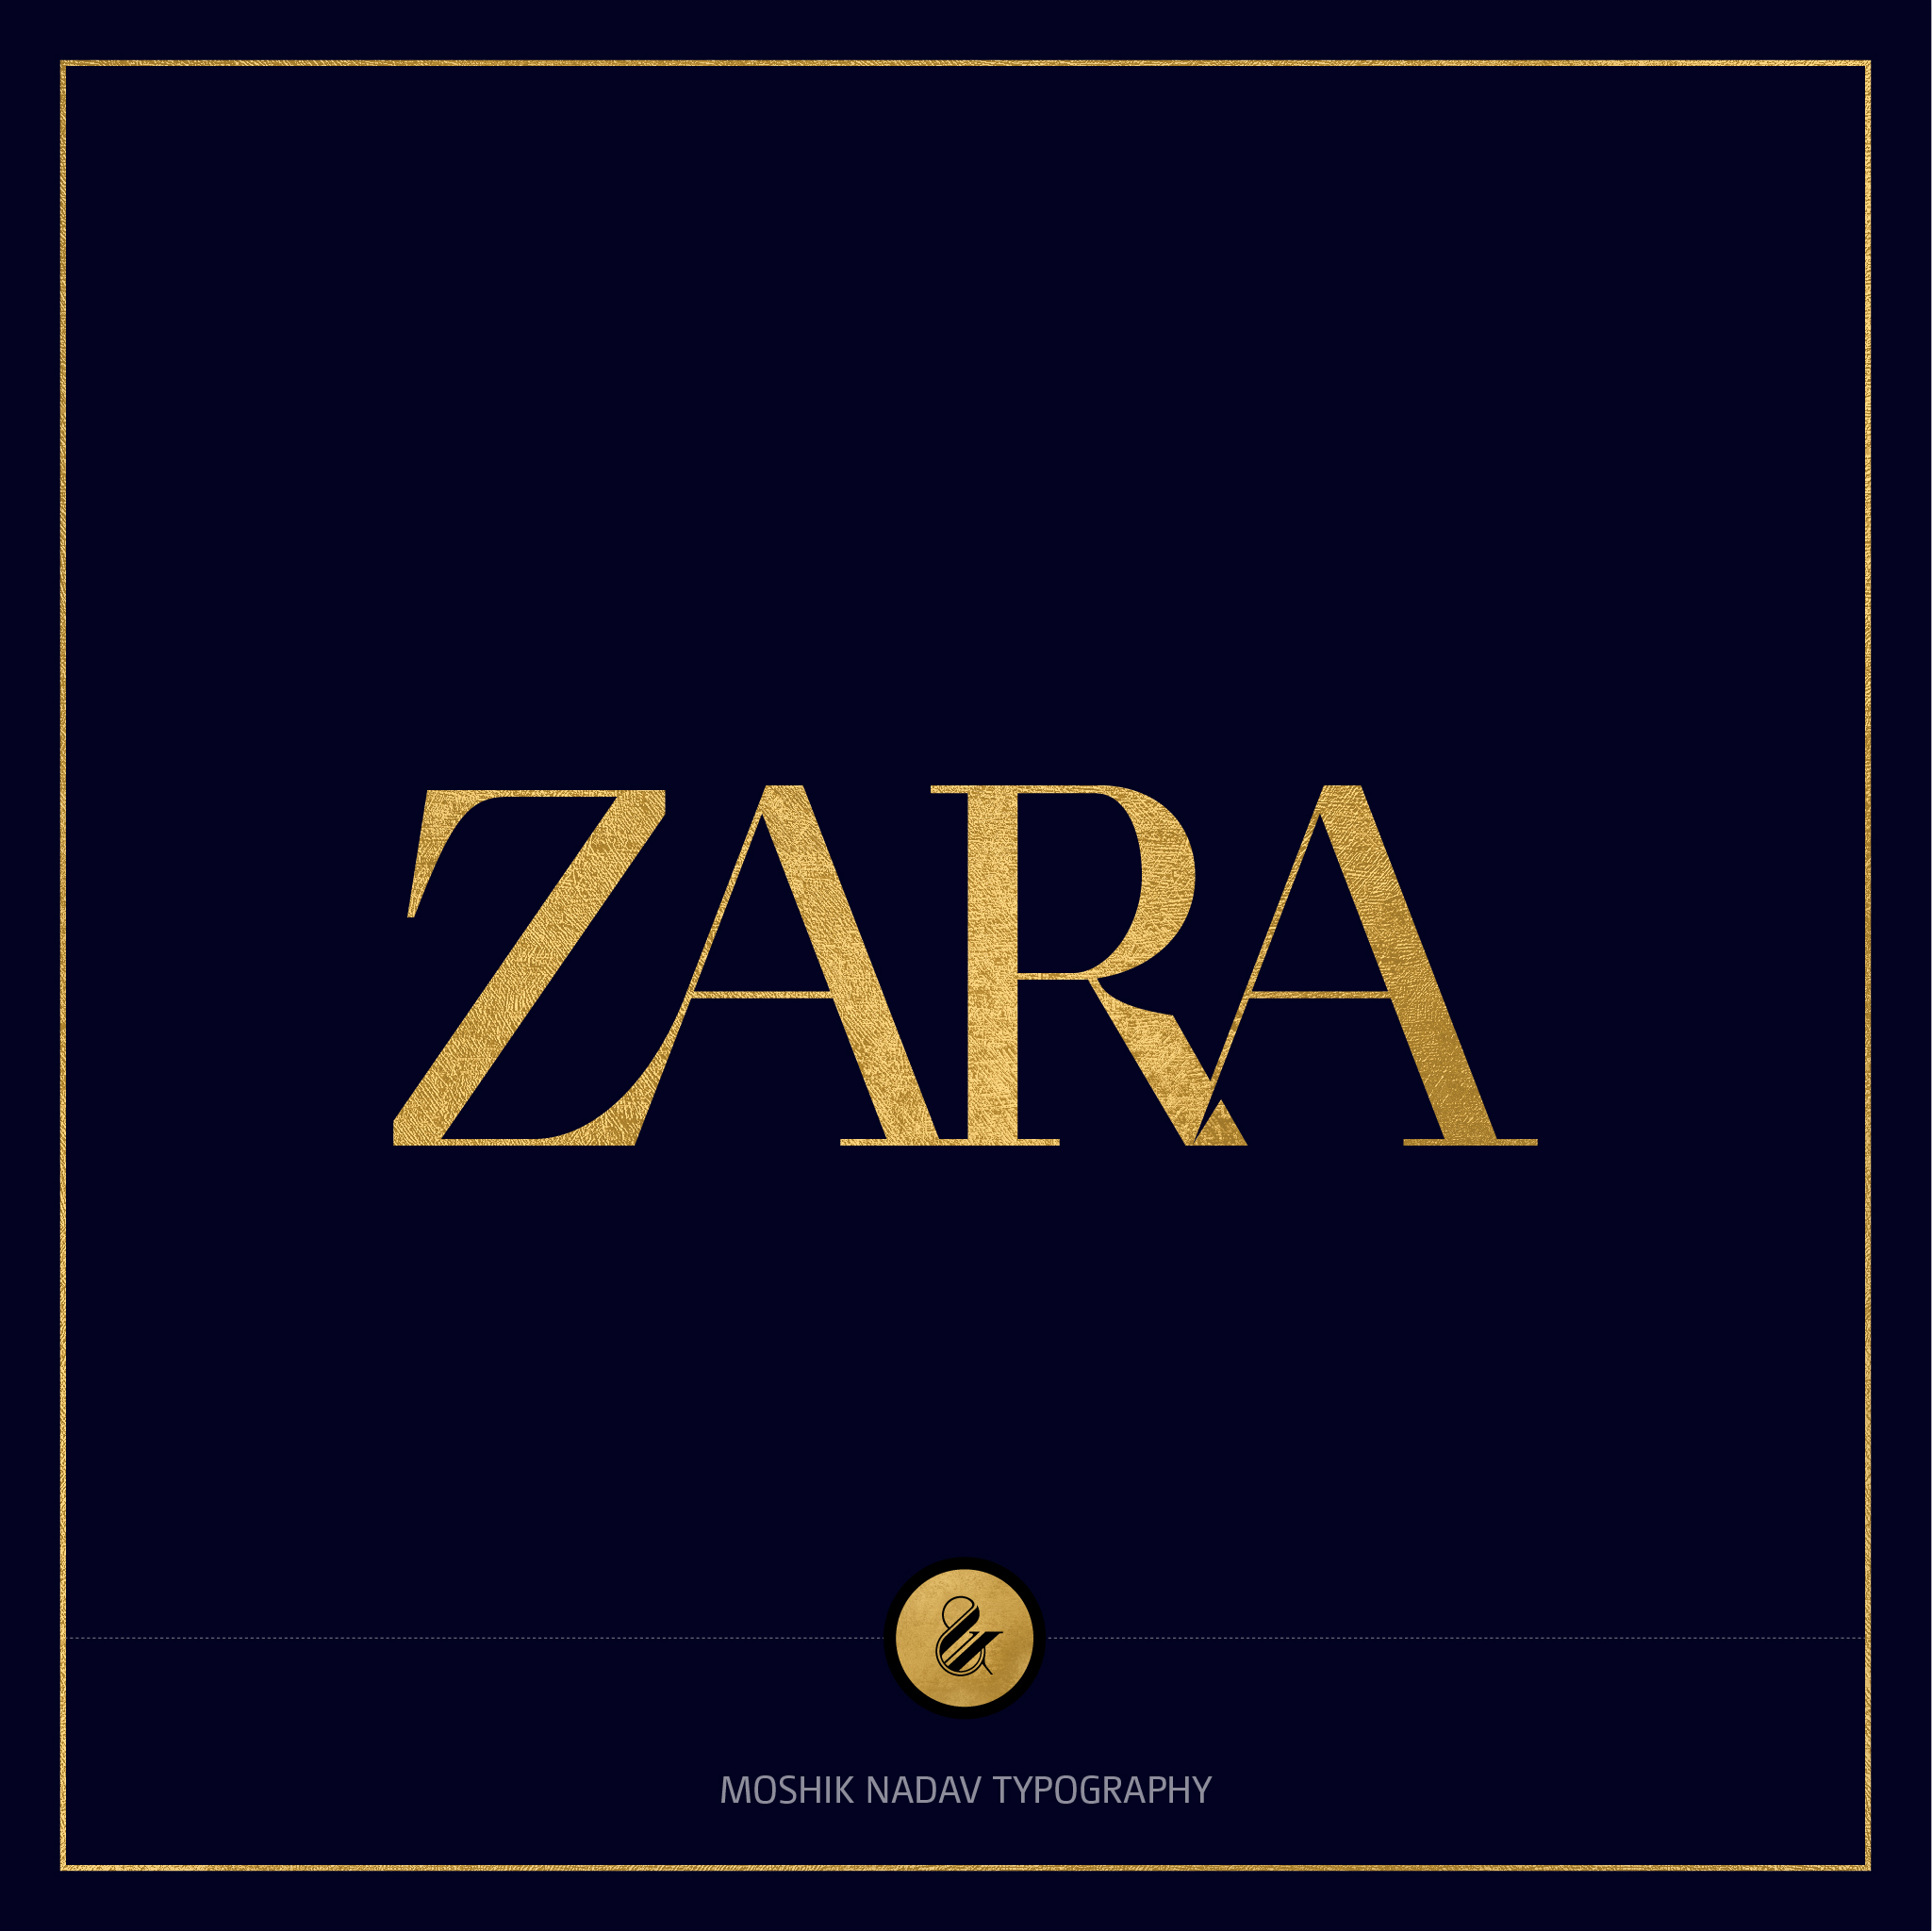 Moshik Nadav version for Zara new logo design